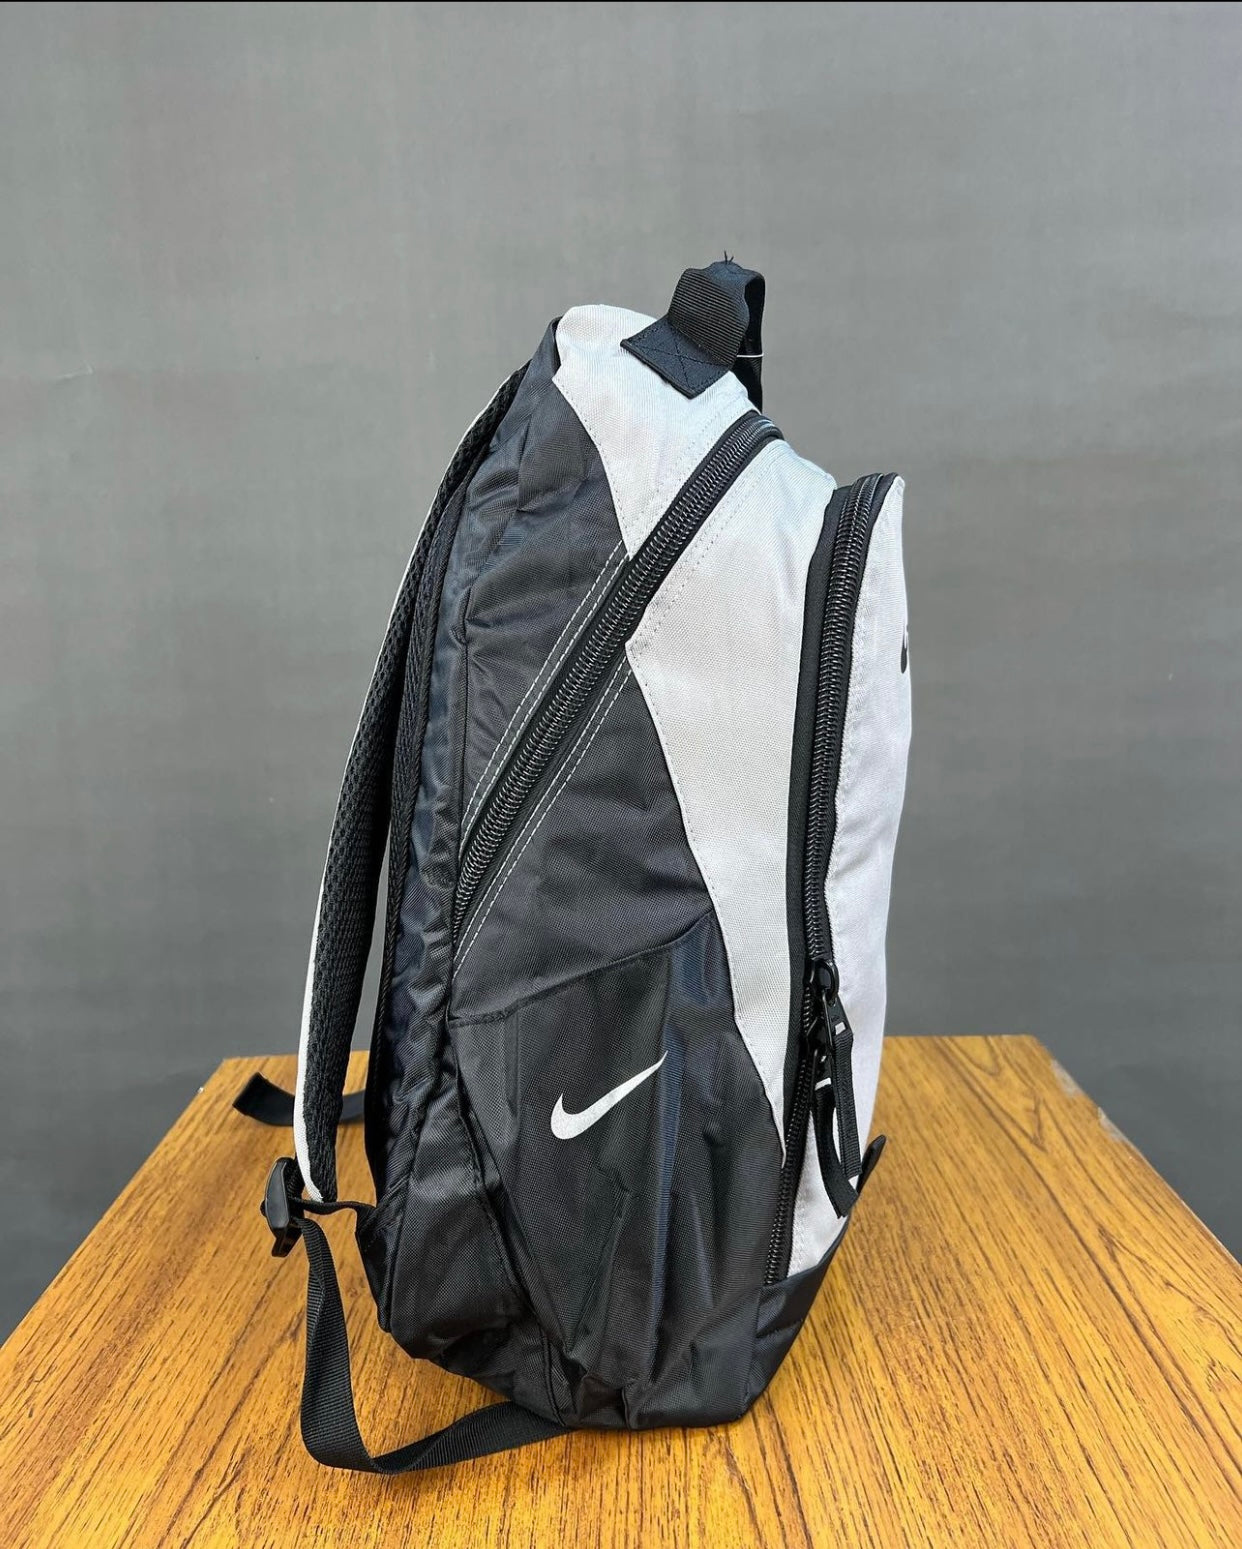 Nike backpack in grey